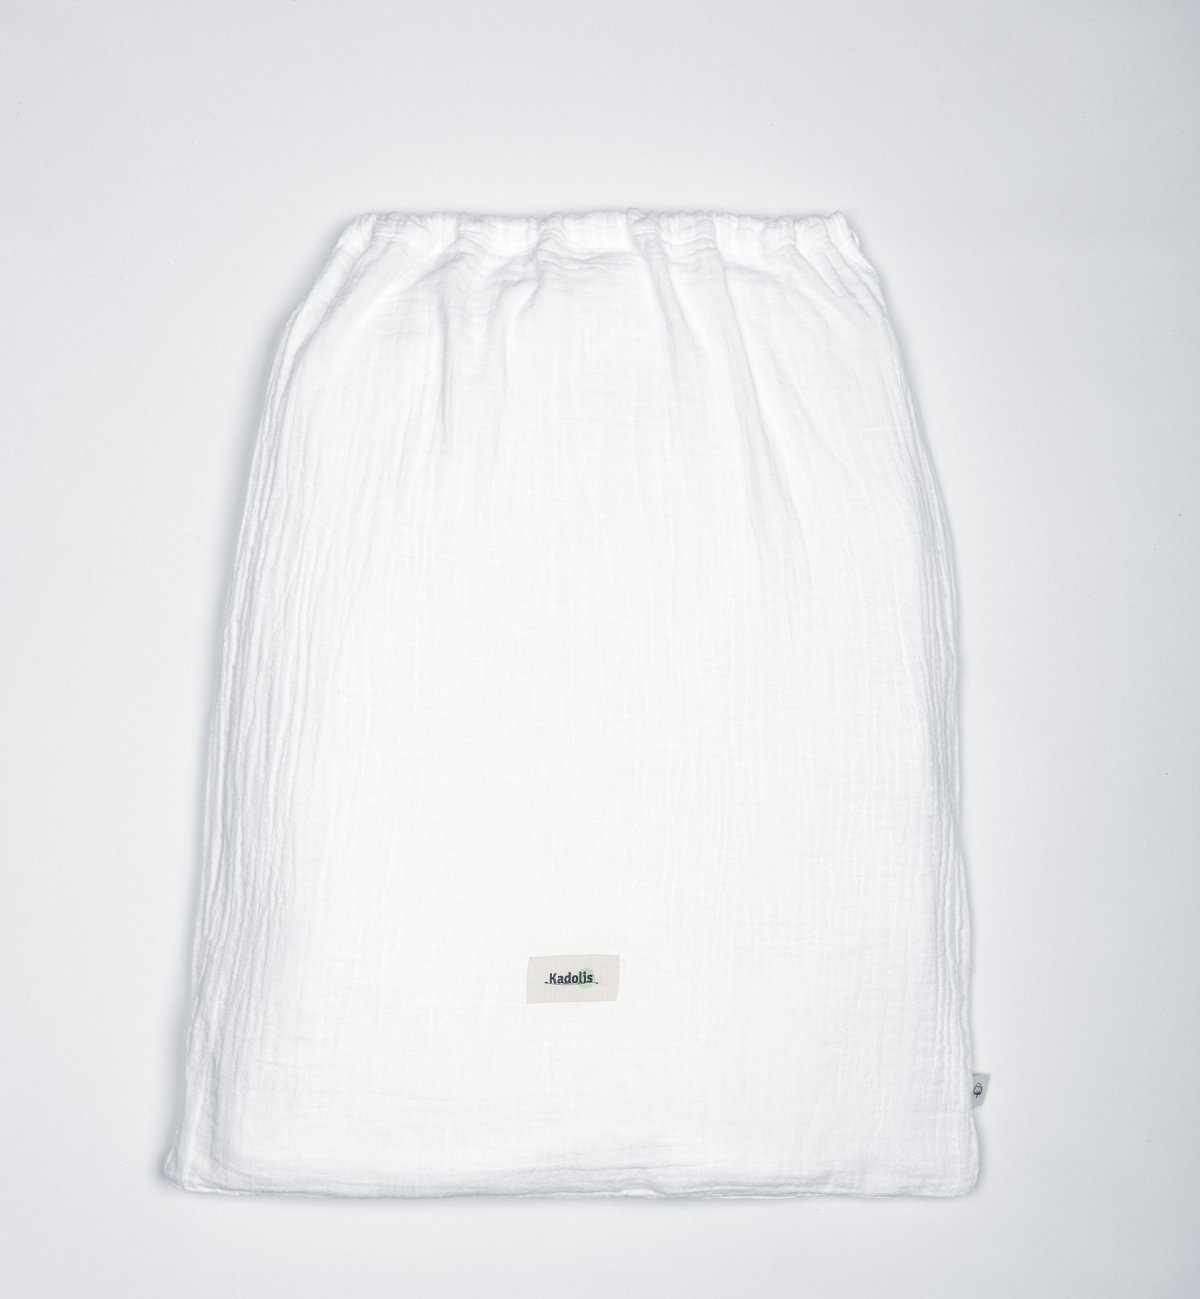 Winter sleeping bag Organic in cotton gauze